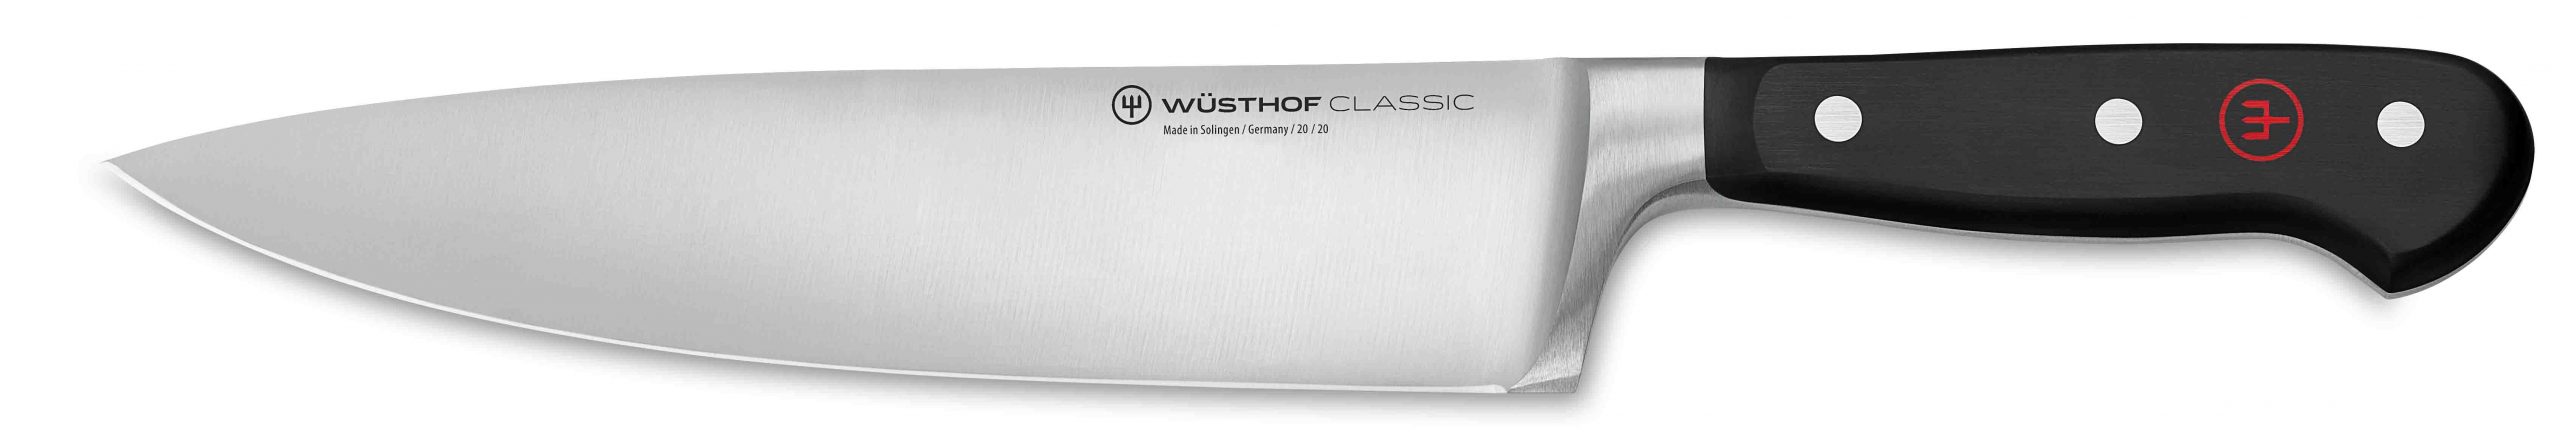 WÜSTHOF Classic Cooks Knife 20cm with FREE Beechwood Knife Block Product Image 1